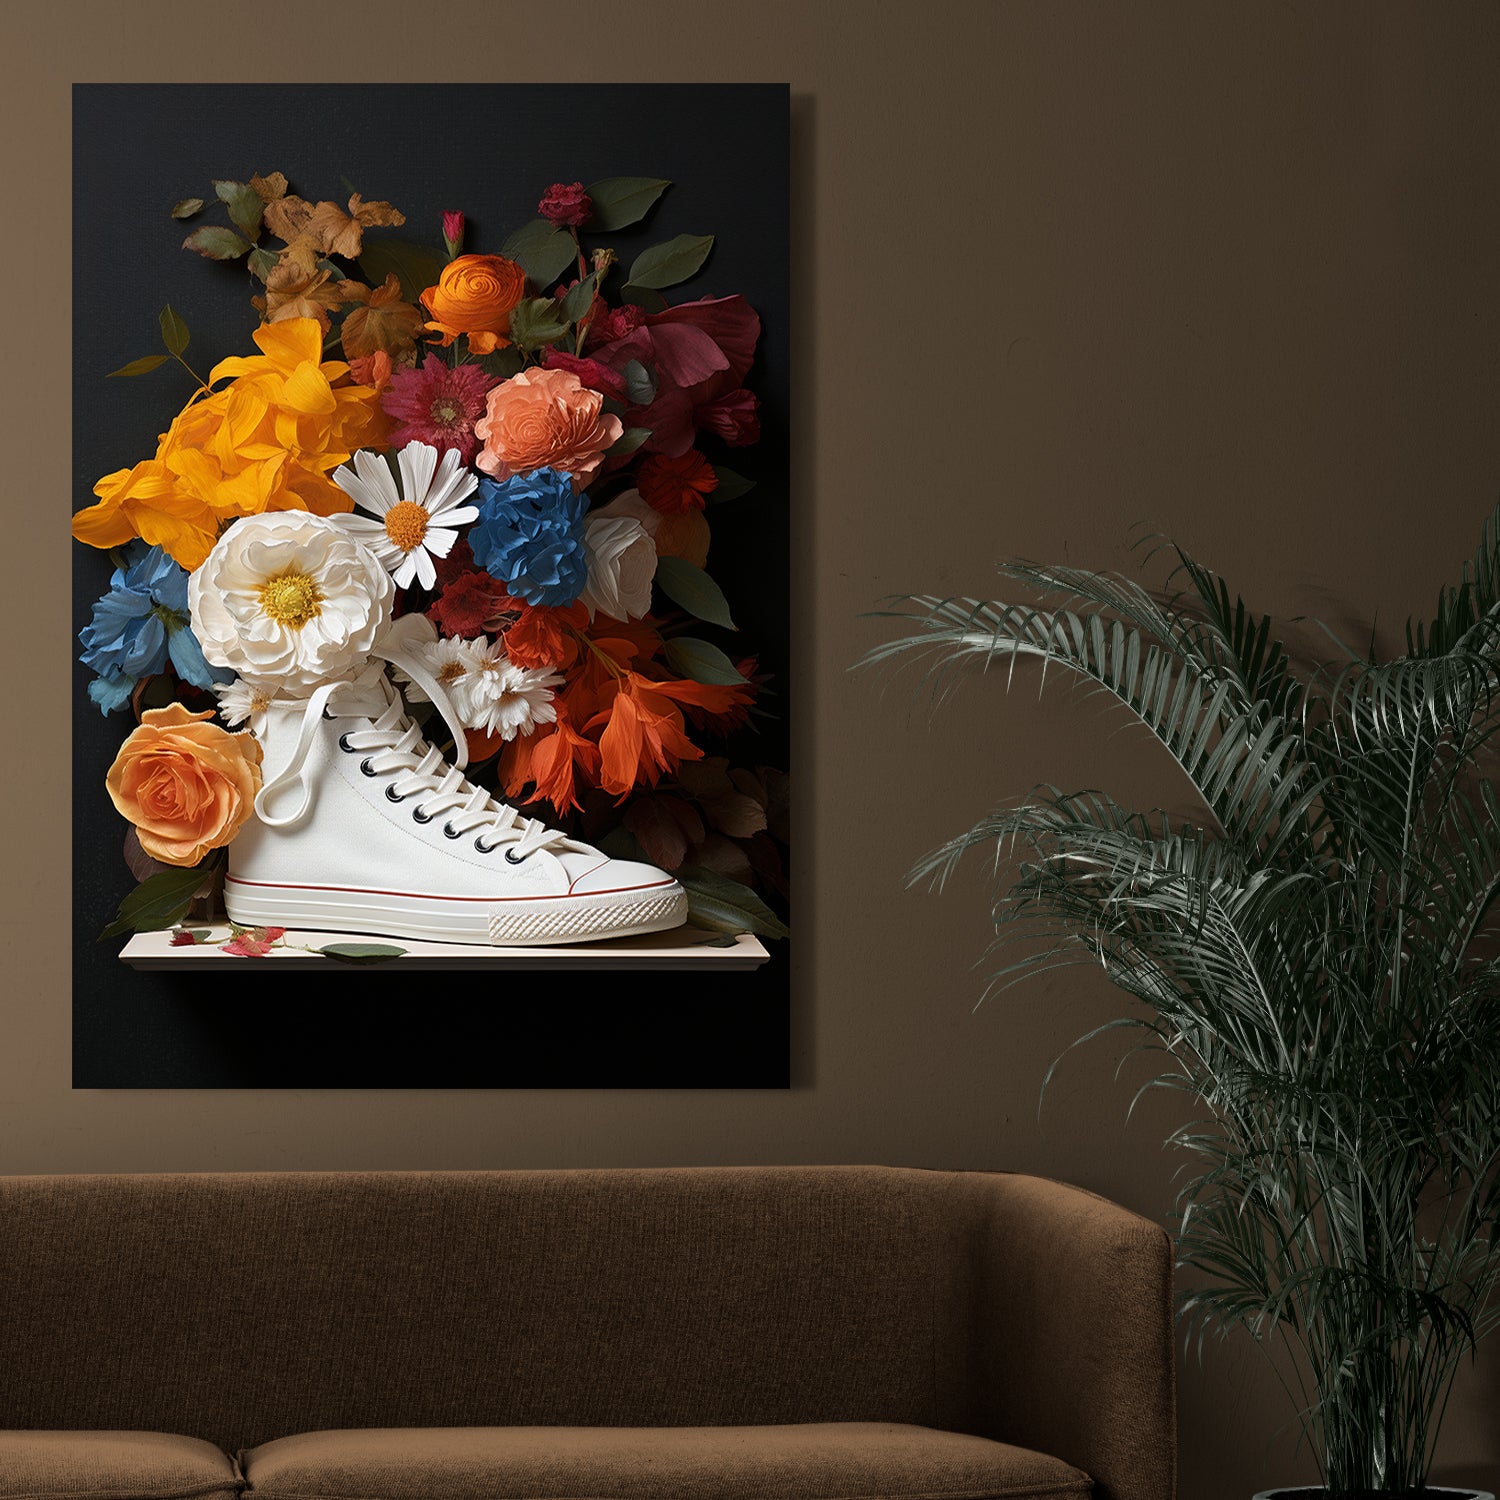 EB001 Sneaker Sneakerhead Hypebeast Off White Art Poster and Canvas | eBay